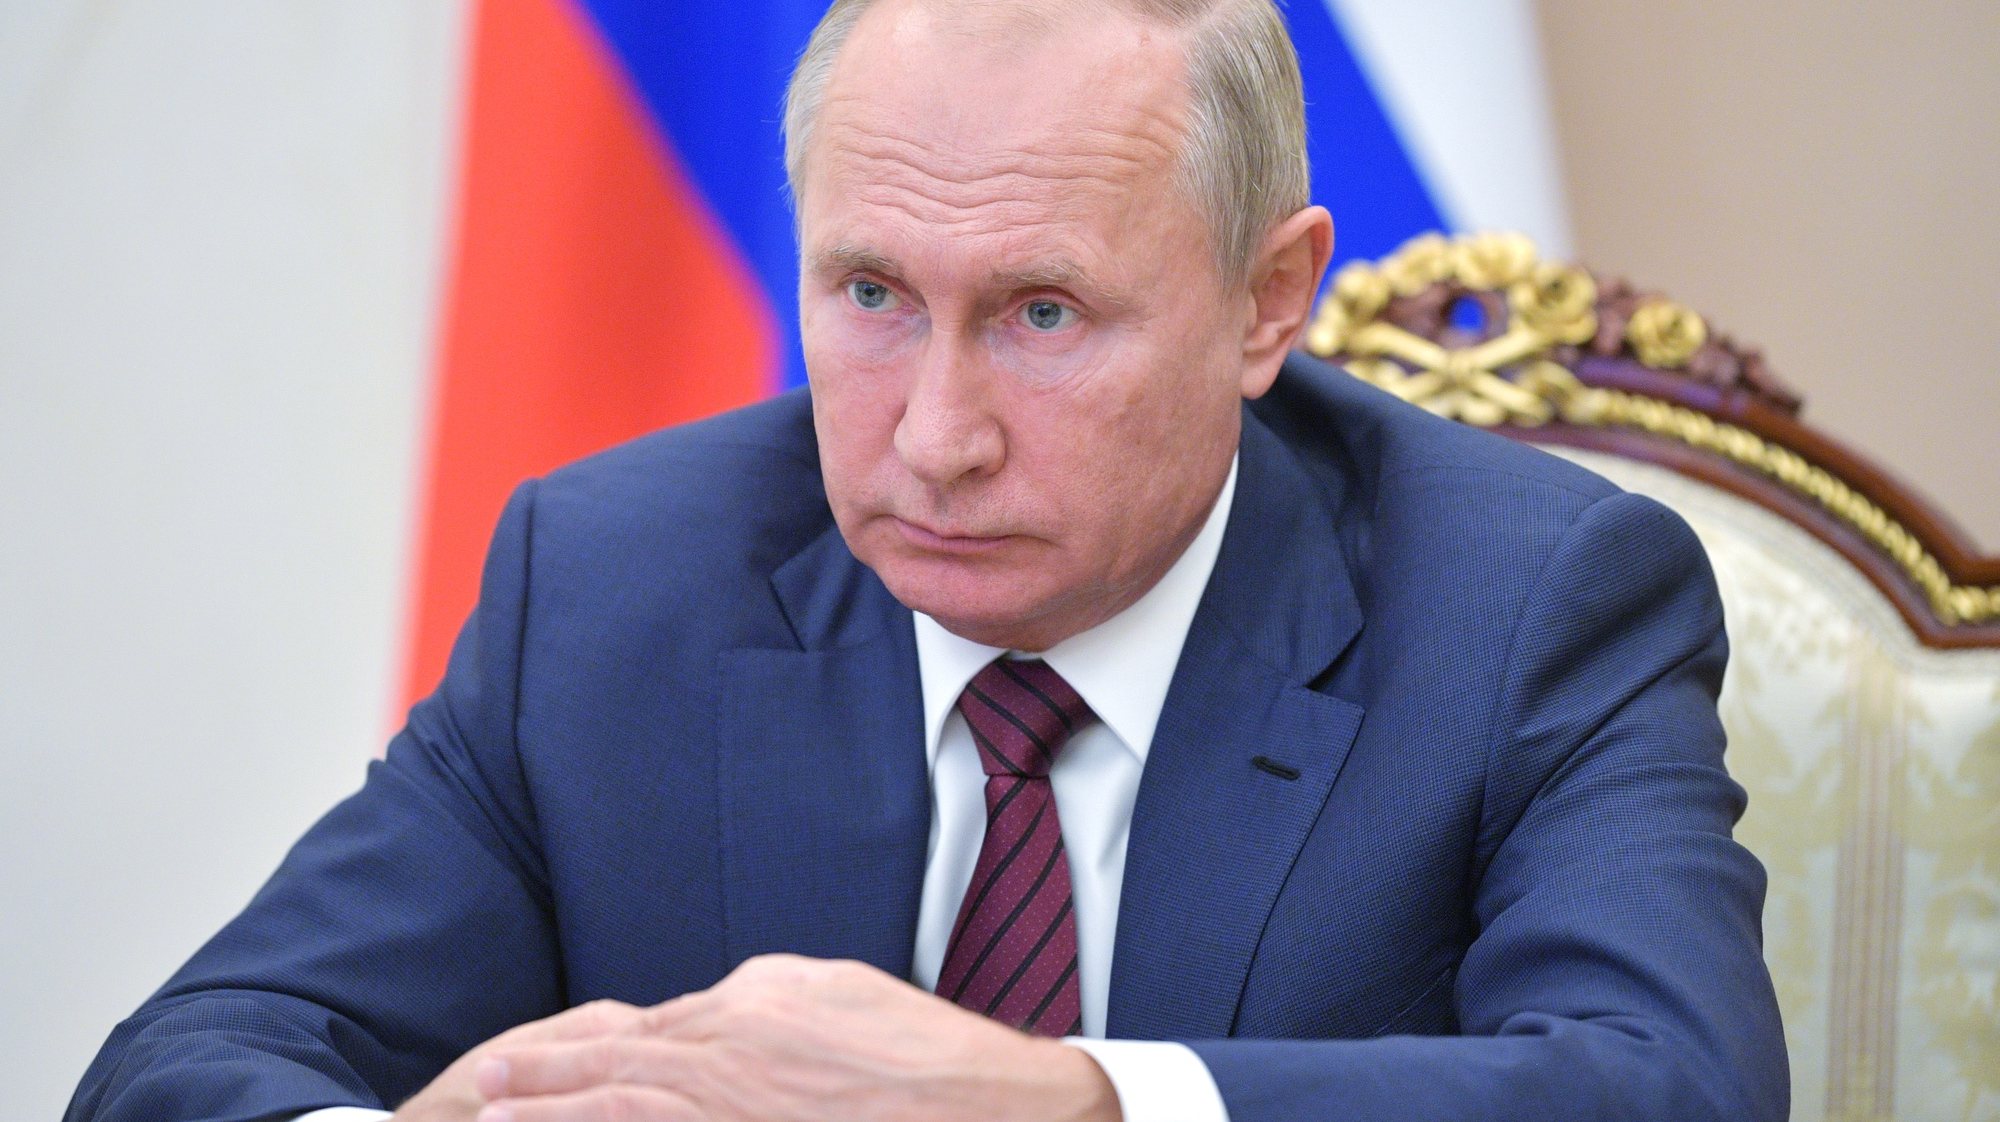 epa08800088 Russian President Vladimir Putin during a working meeting via teleconference call at the Kremlin in Moscow, Russia, 05 November 2020.  EPA/ALEXEI NIKOLSKY / SPUTNIK / KREMLIN POOL MANDATORY CREDIT